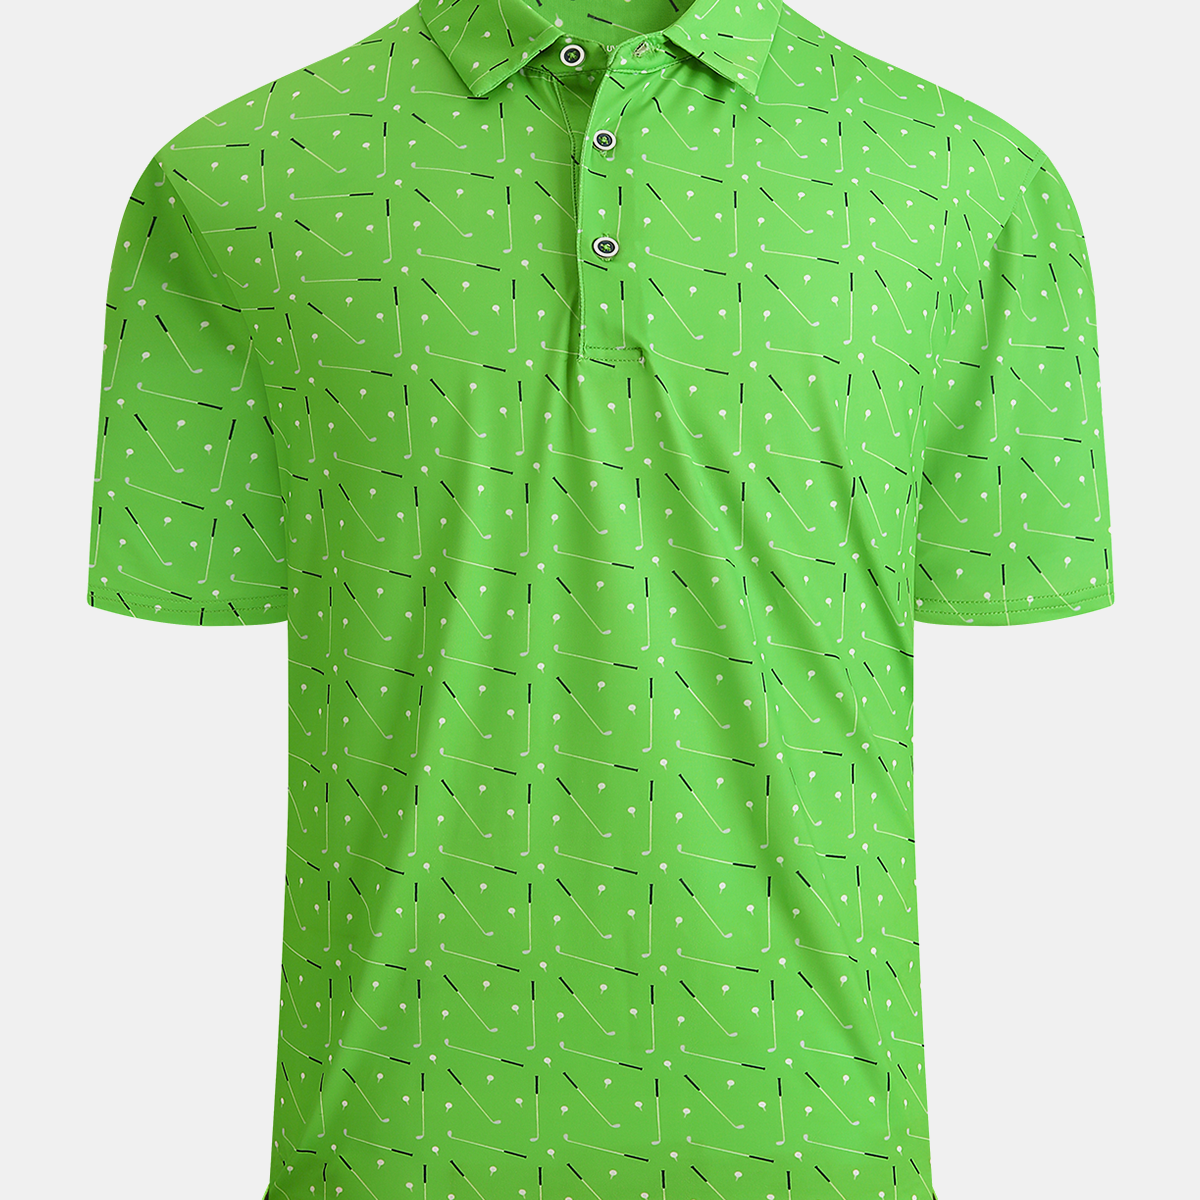 Men's Summer Funny Golf Print Moisture Wicking Performance Polo Short Sleeve Shirt